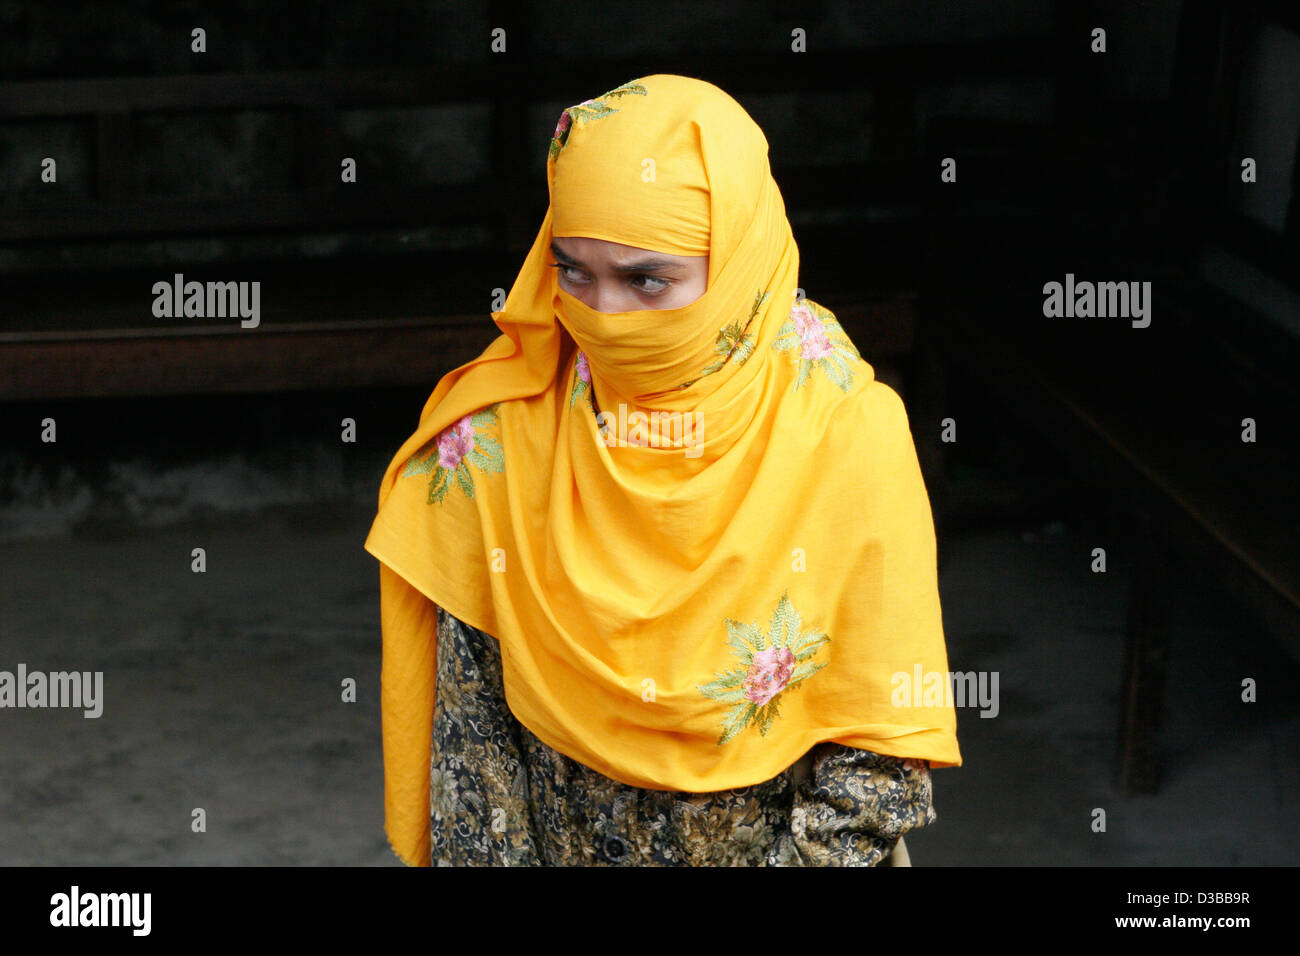 Muslim Bangladeshi girl with headscarf, Bangladesh Stock Photo